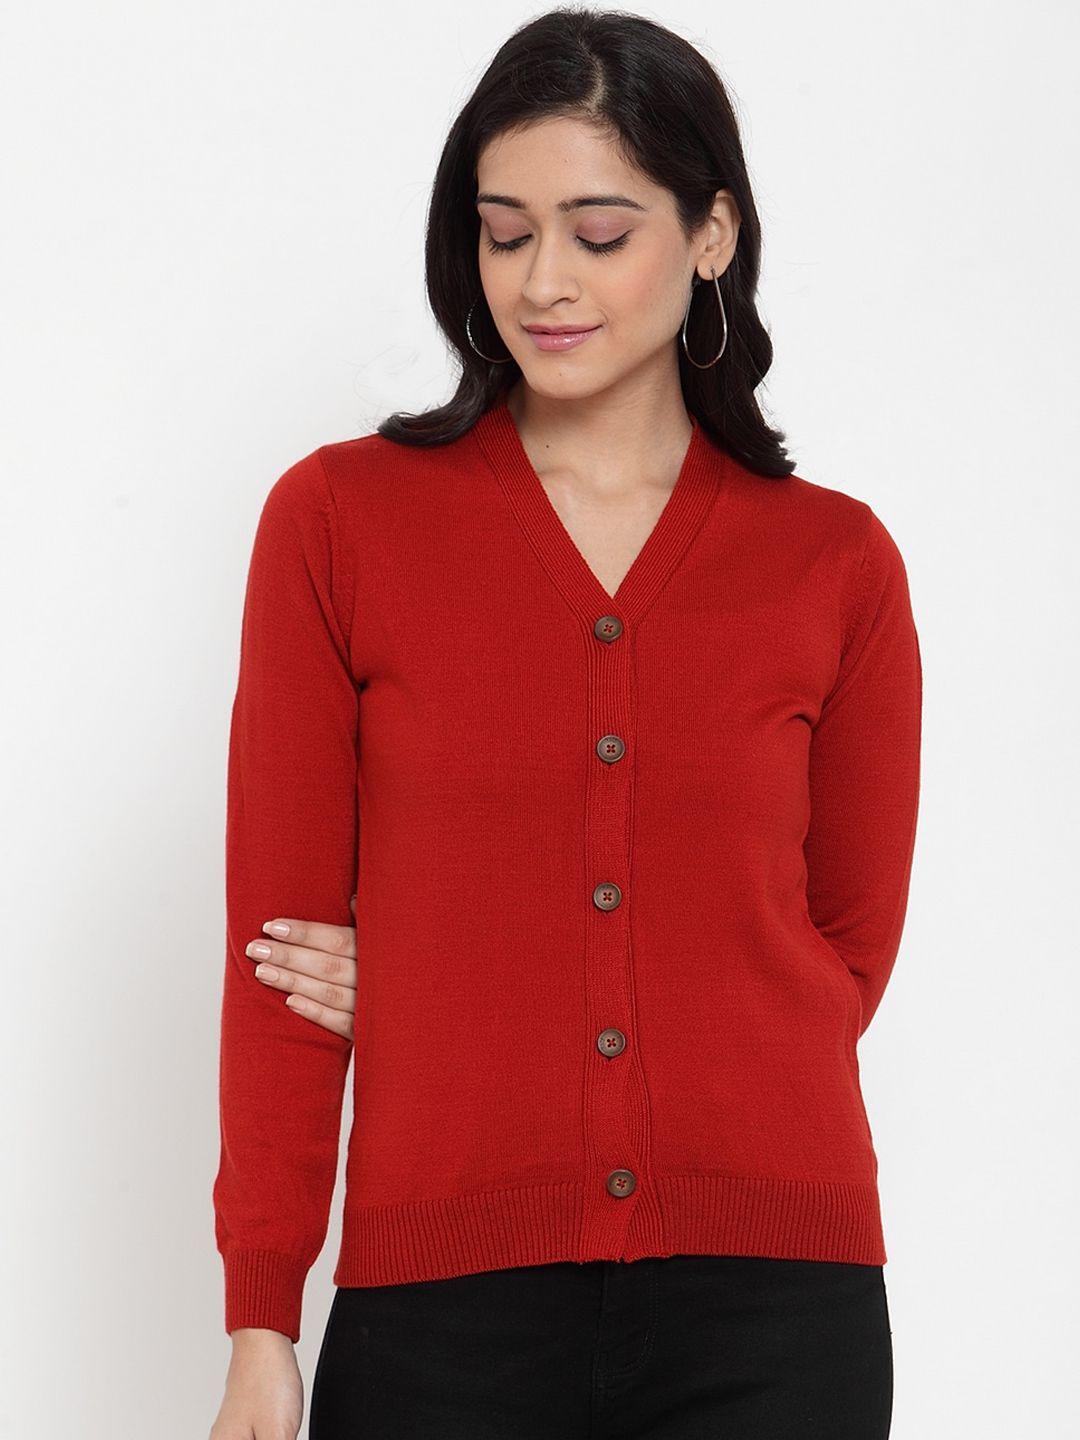 kalt women red solid cardigan sweater